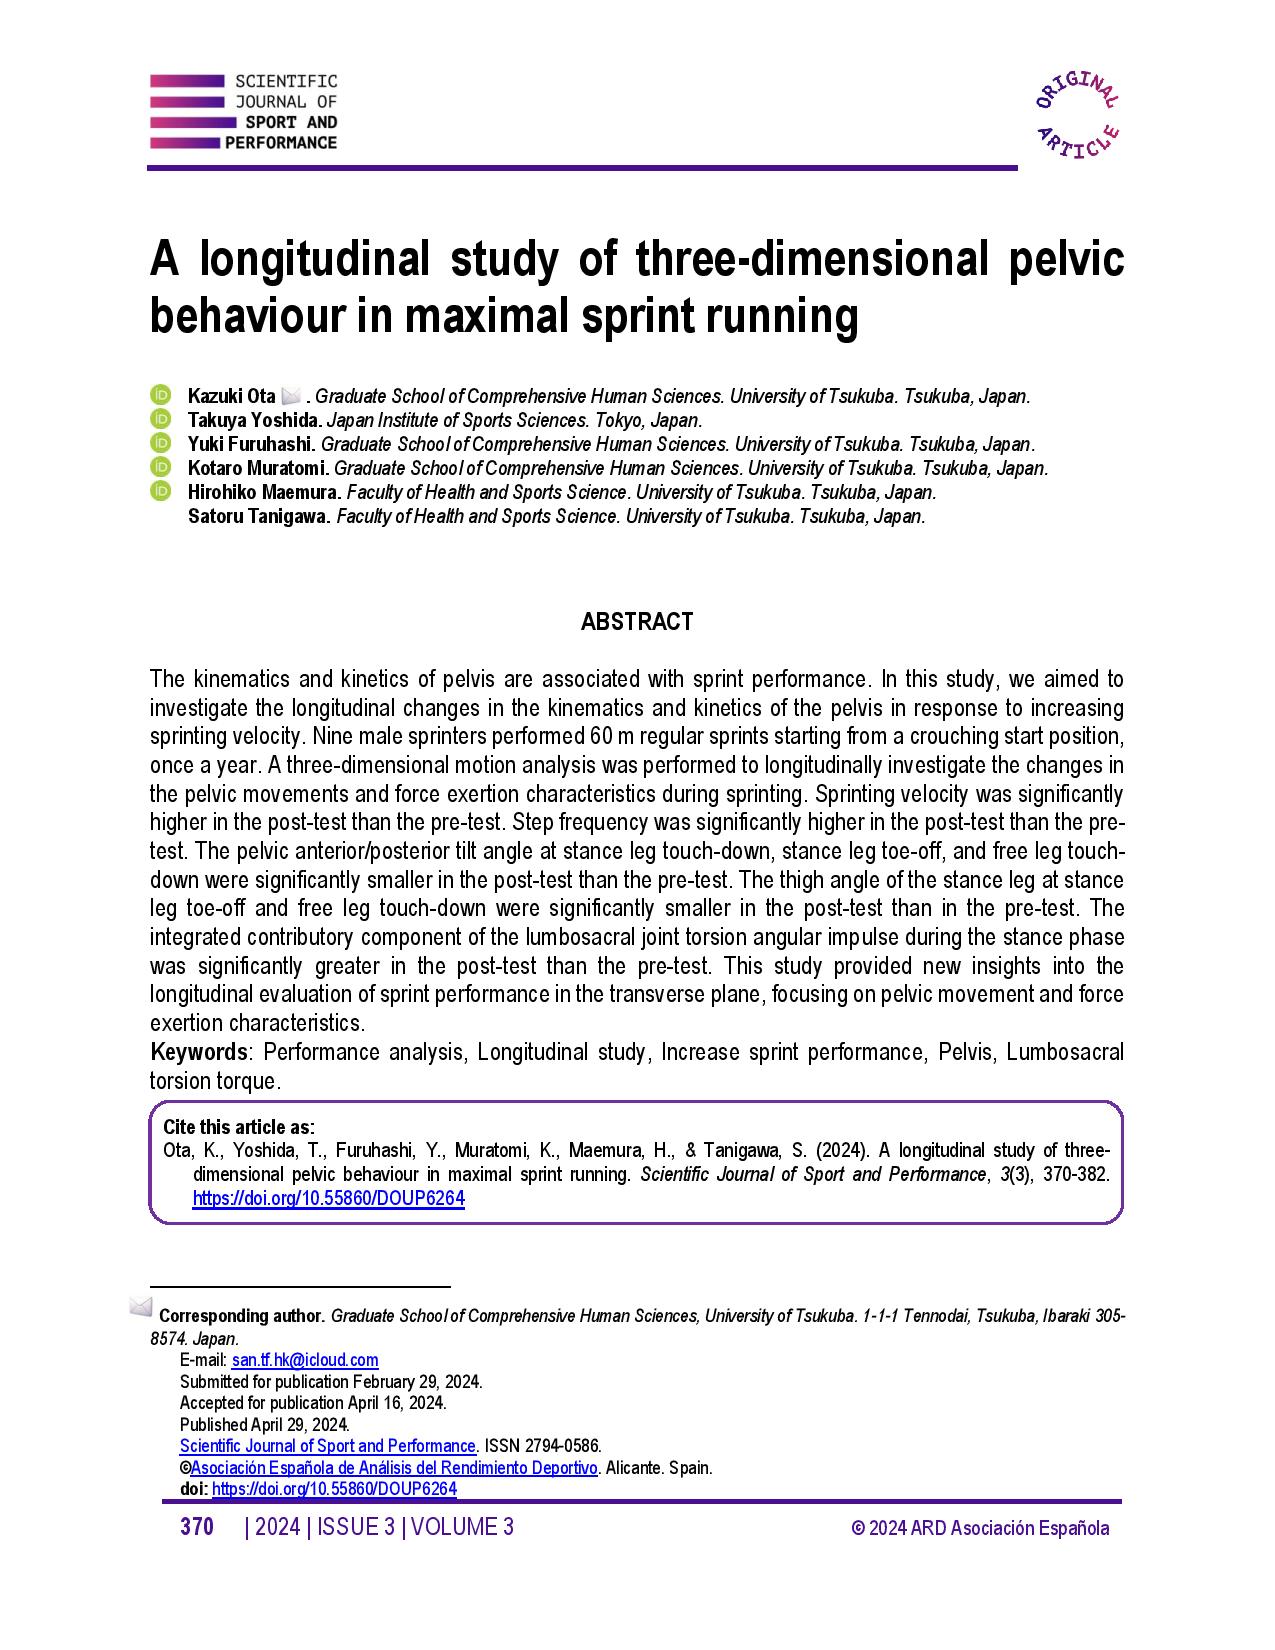 A longitudinal study of three-dimensional pelvic behaviour in maximal sprint running